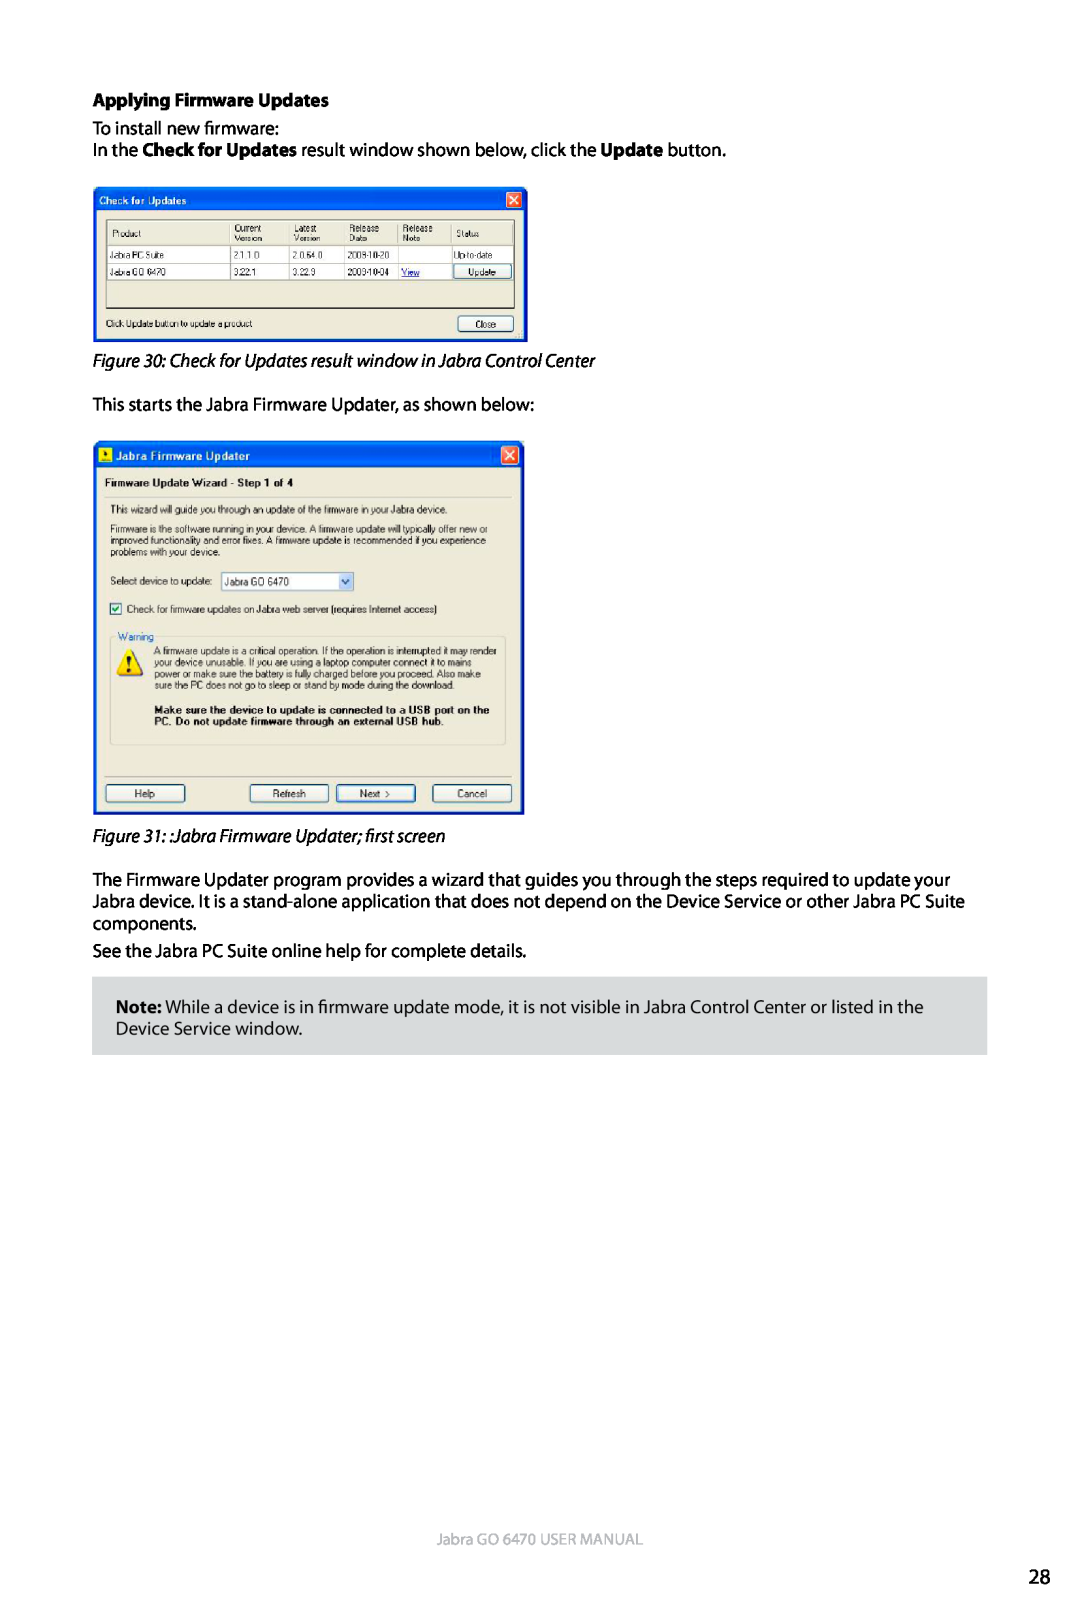 Jabra GO 6470 user manual Applying Firmware Updates 